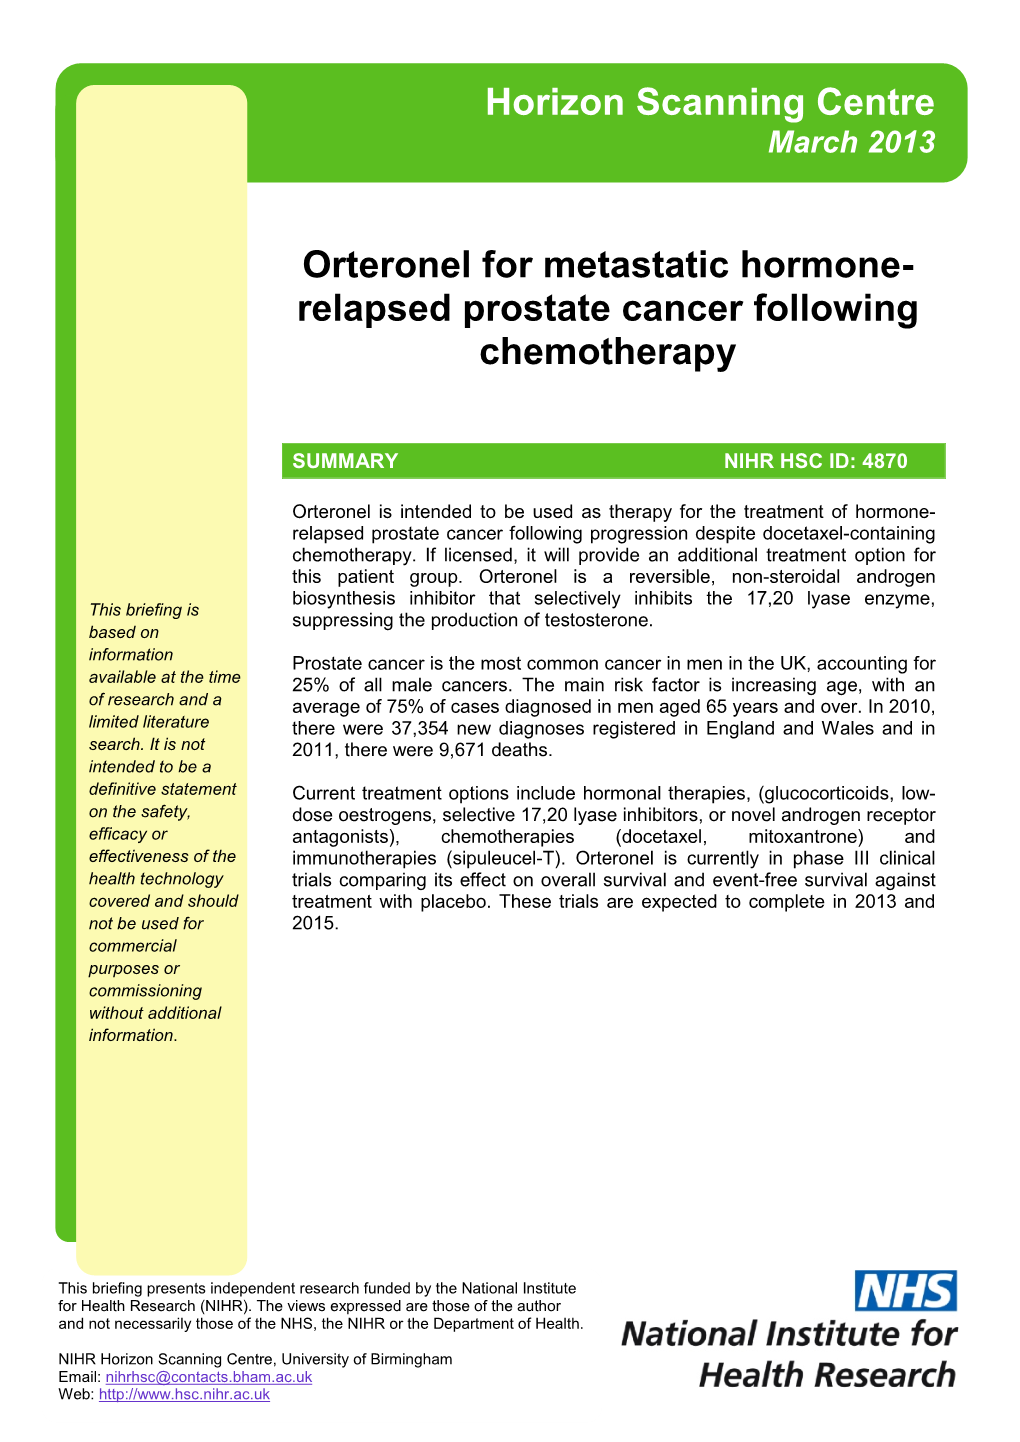 Orteronel for Metastatic Hormone-Relapsed Prostate Cancer